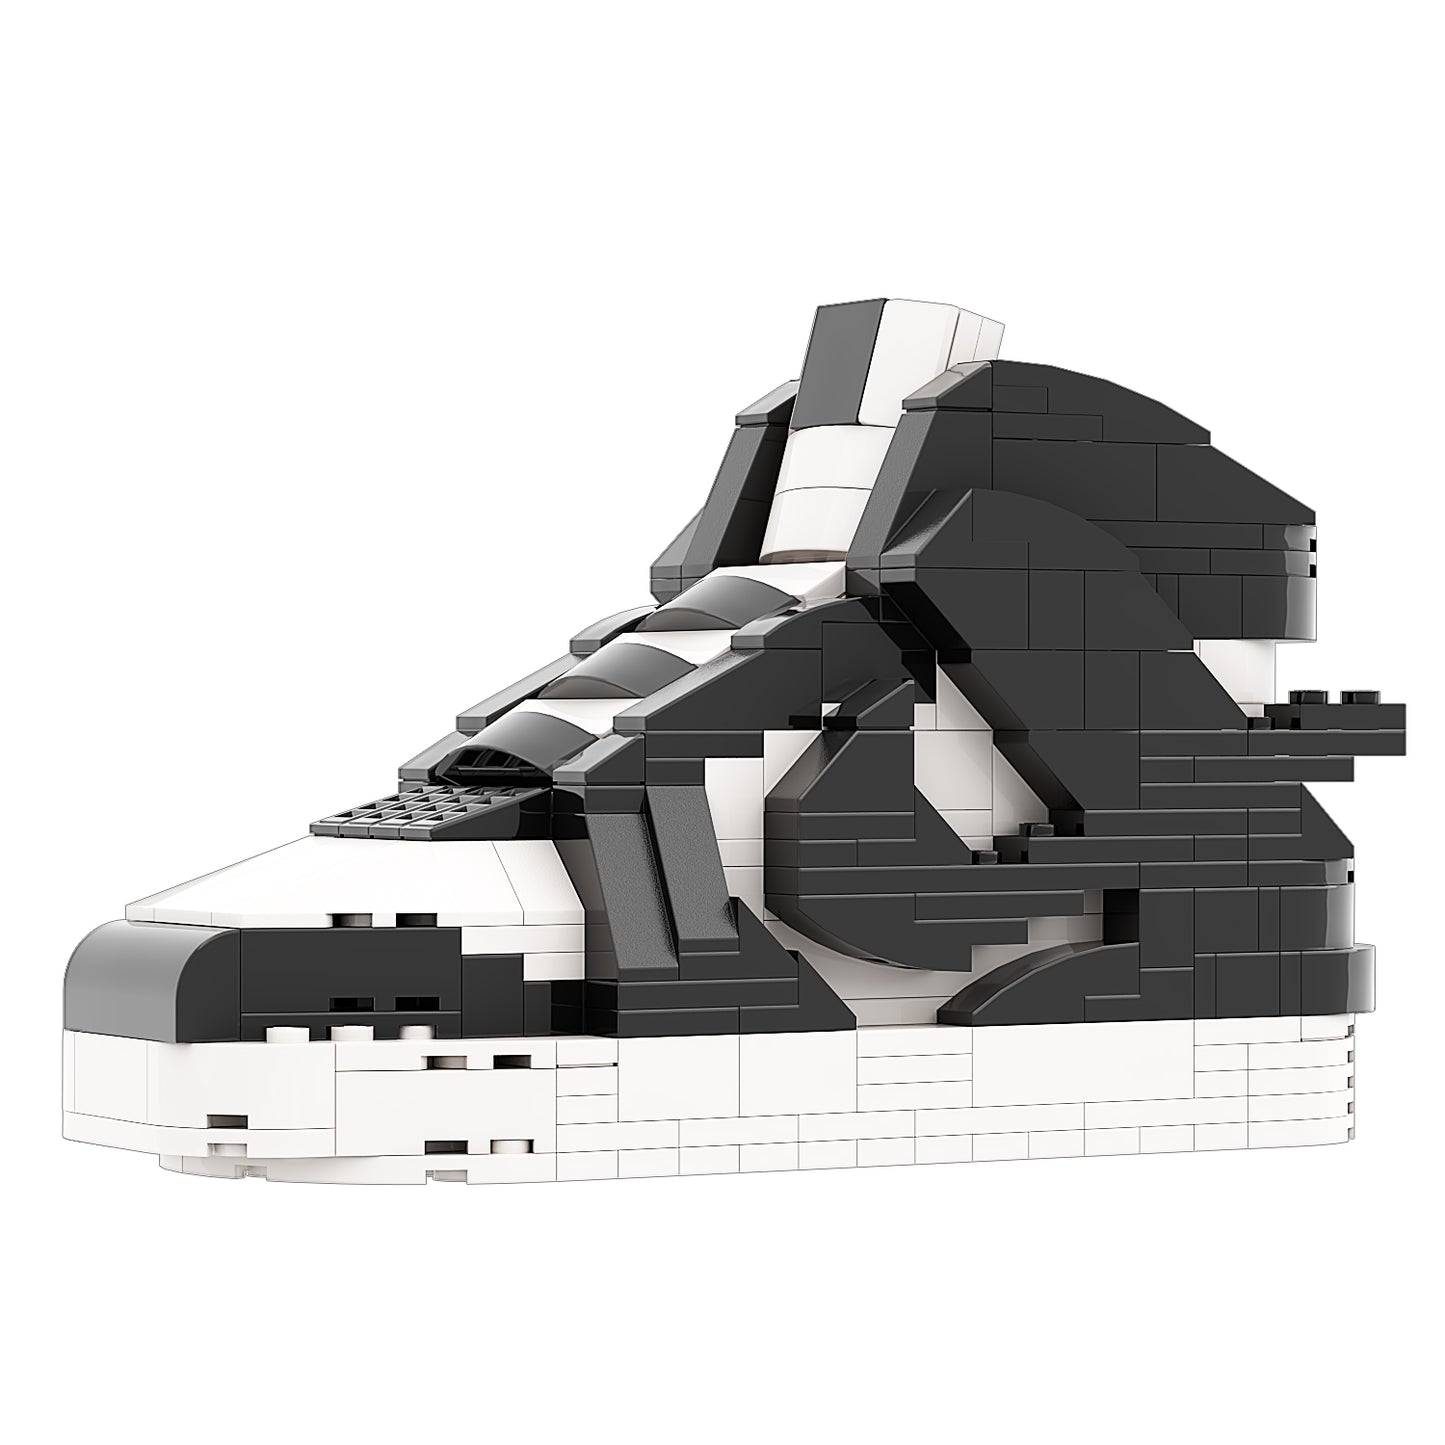 REGULAR "Dunk High Ambush" Sneaker Bricks with Mini Figure